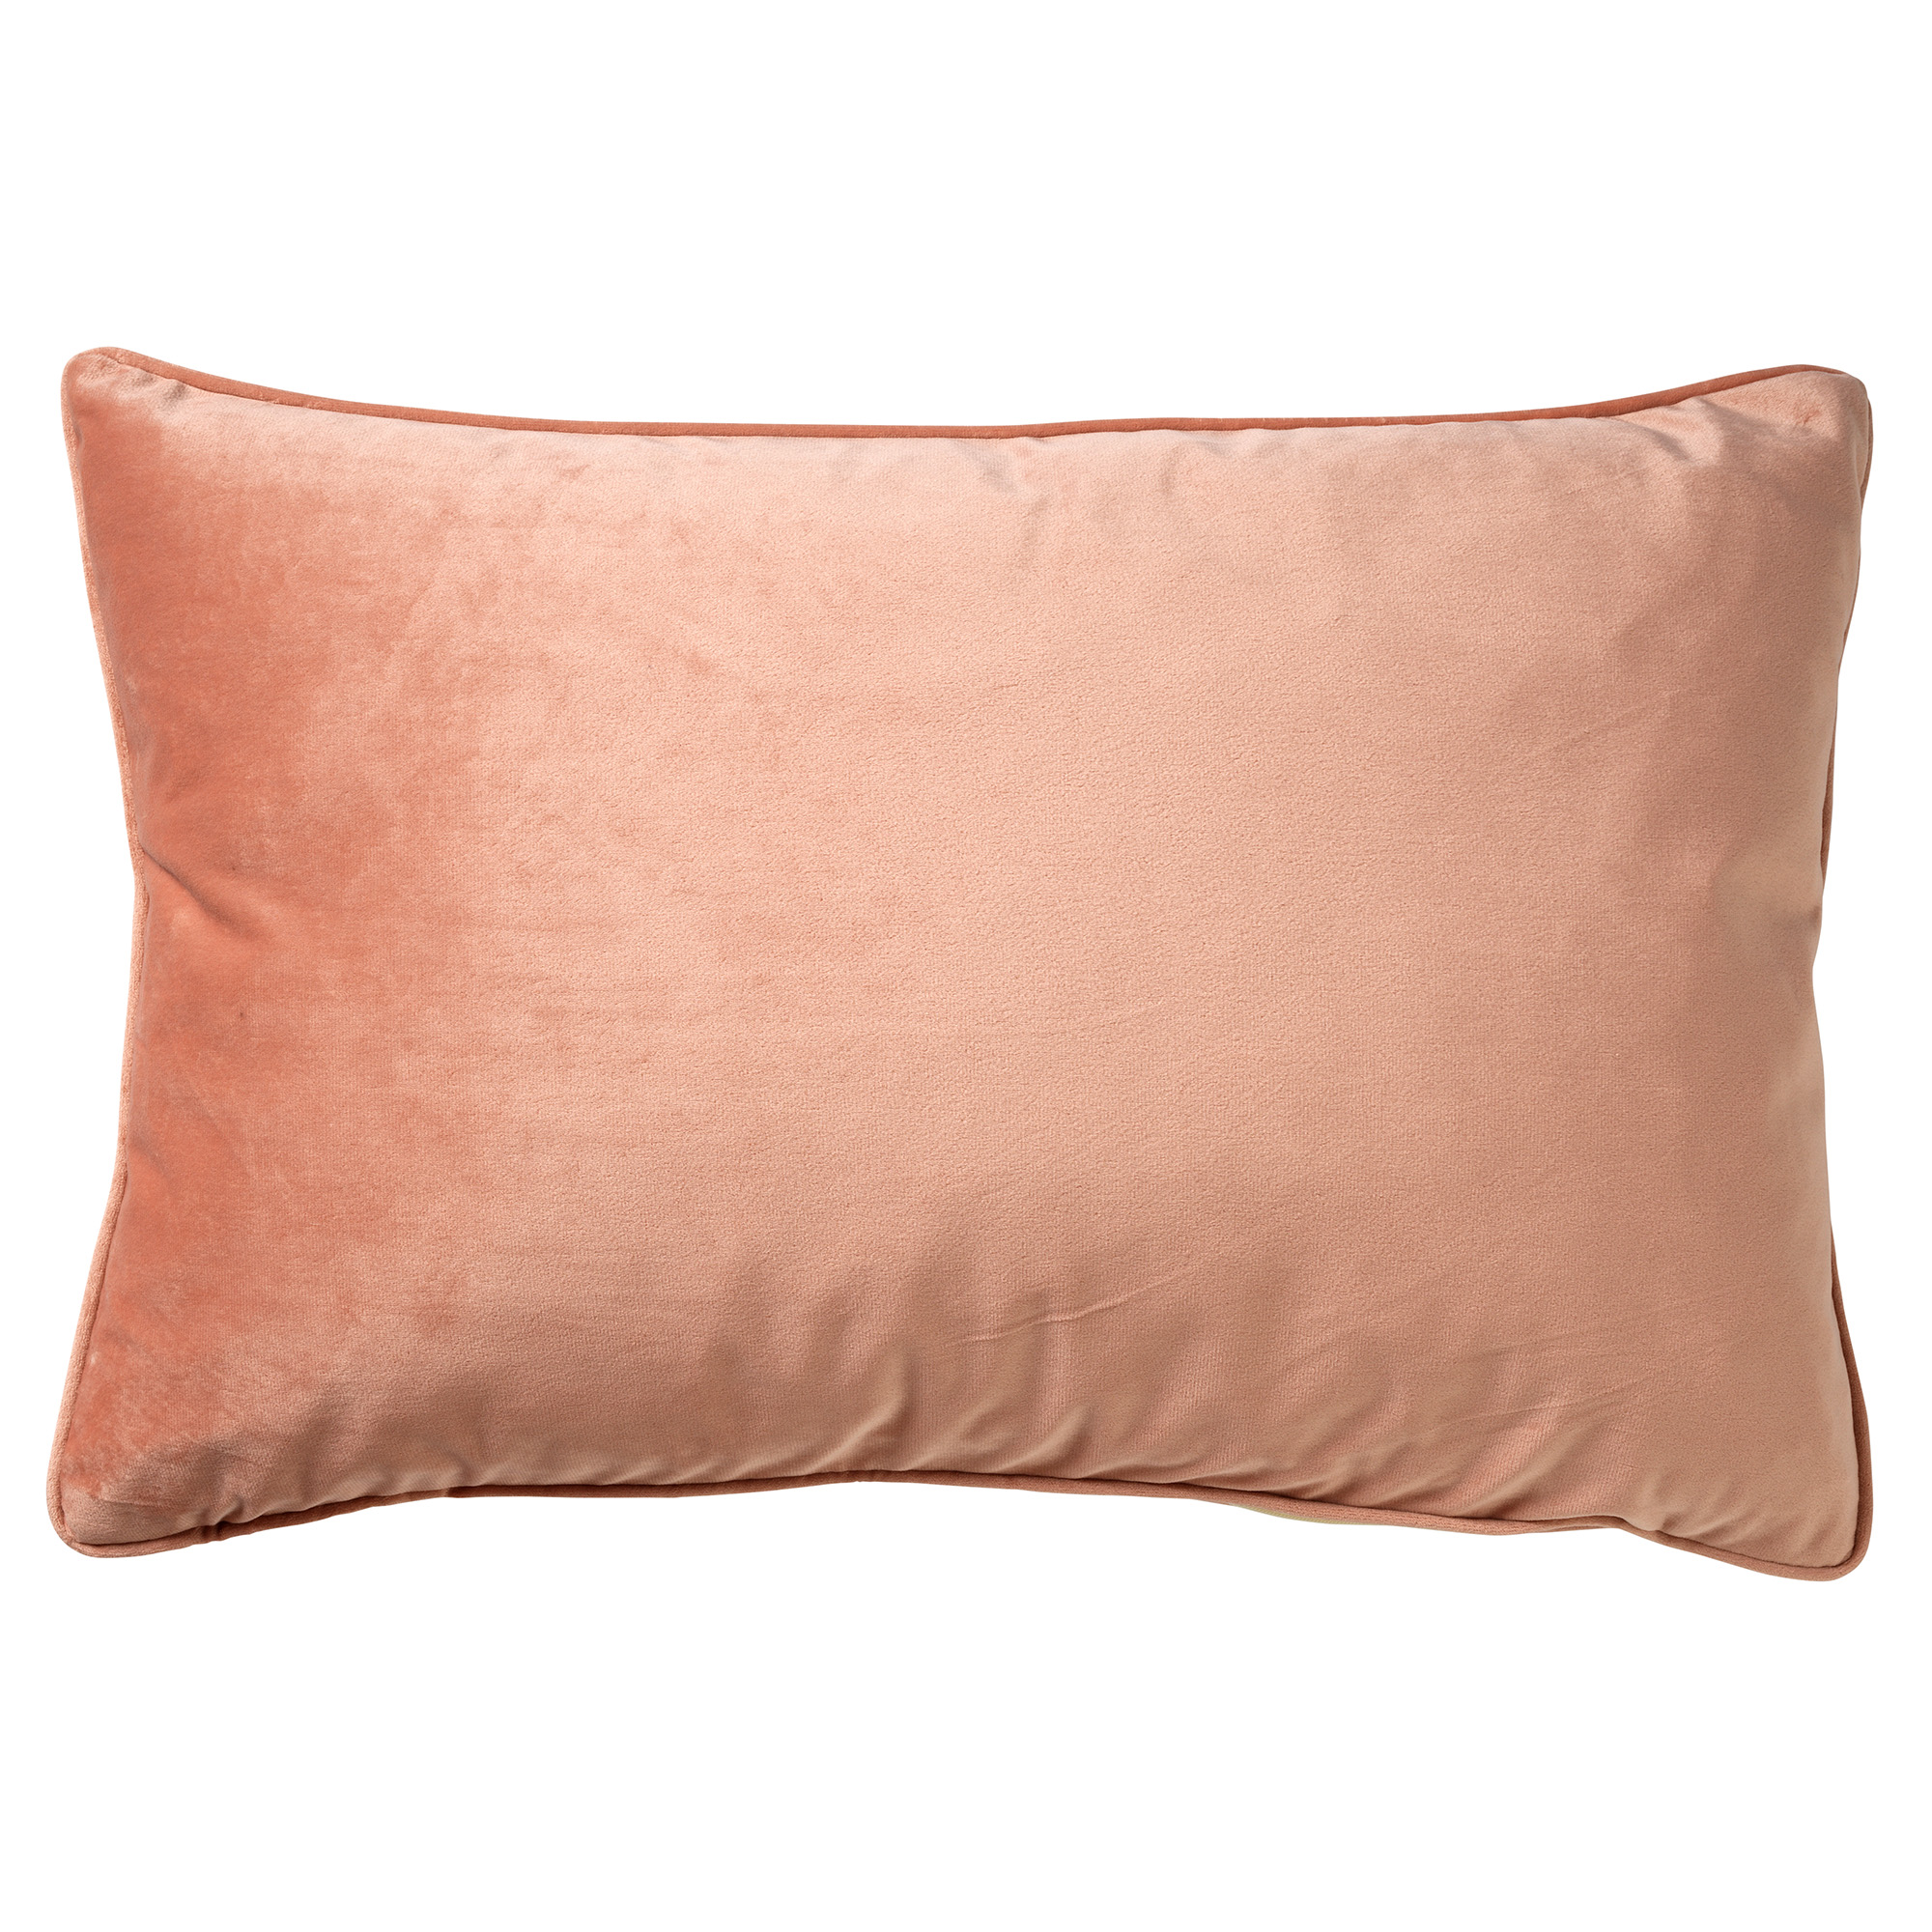 FINN - Cushion velvet 40x60 cm - Muted Clay - pink